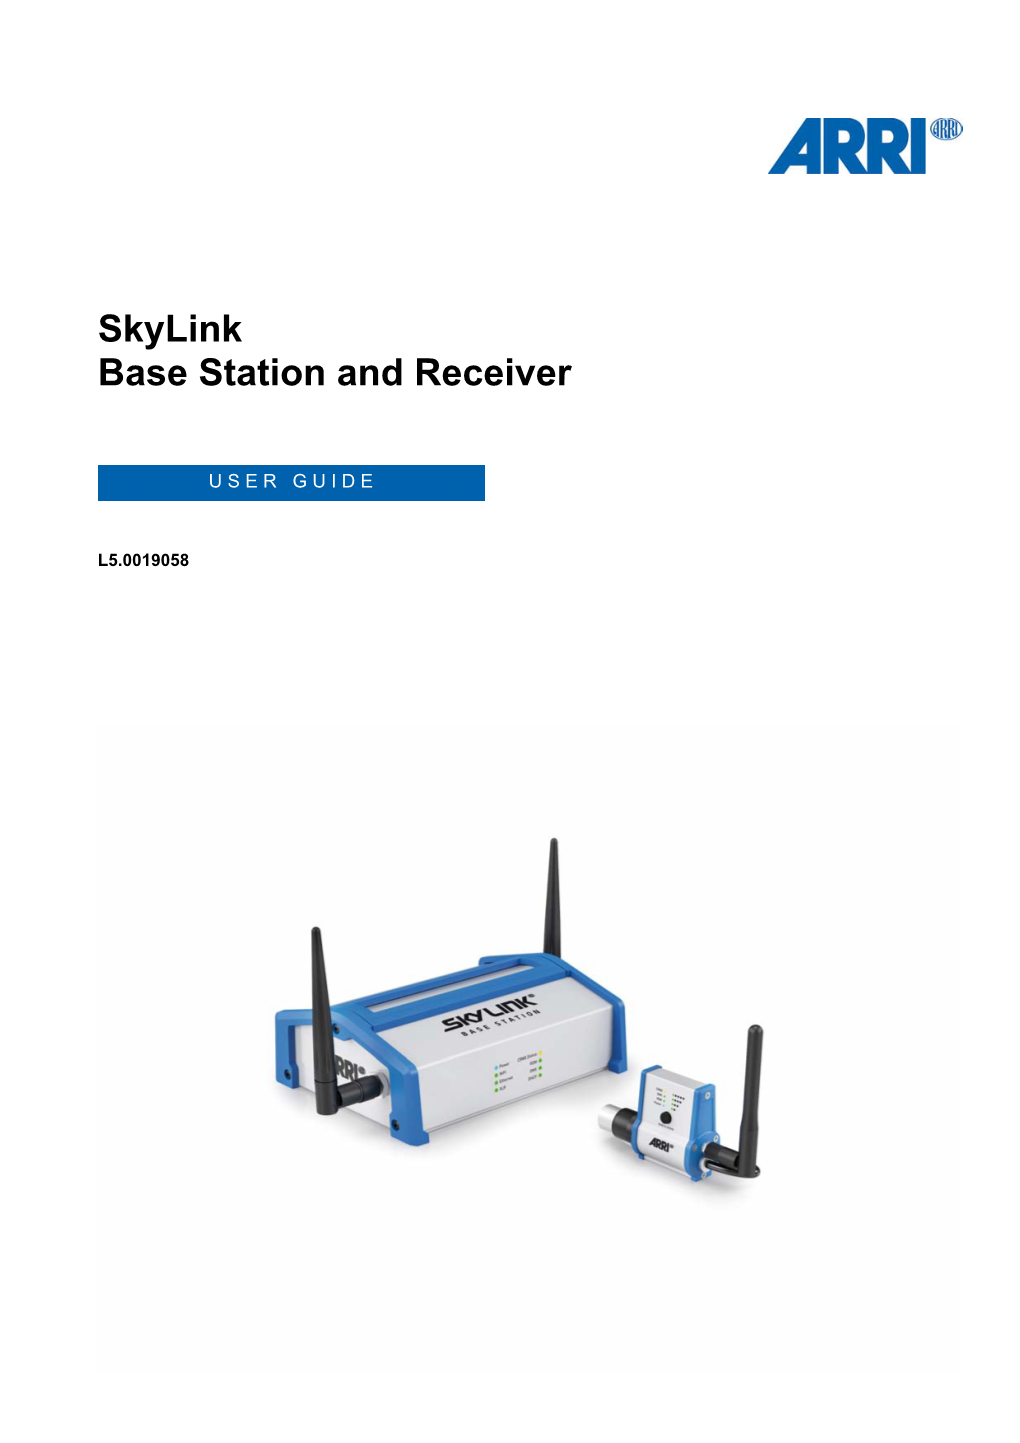 Skylink Base Station and Receiver